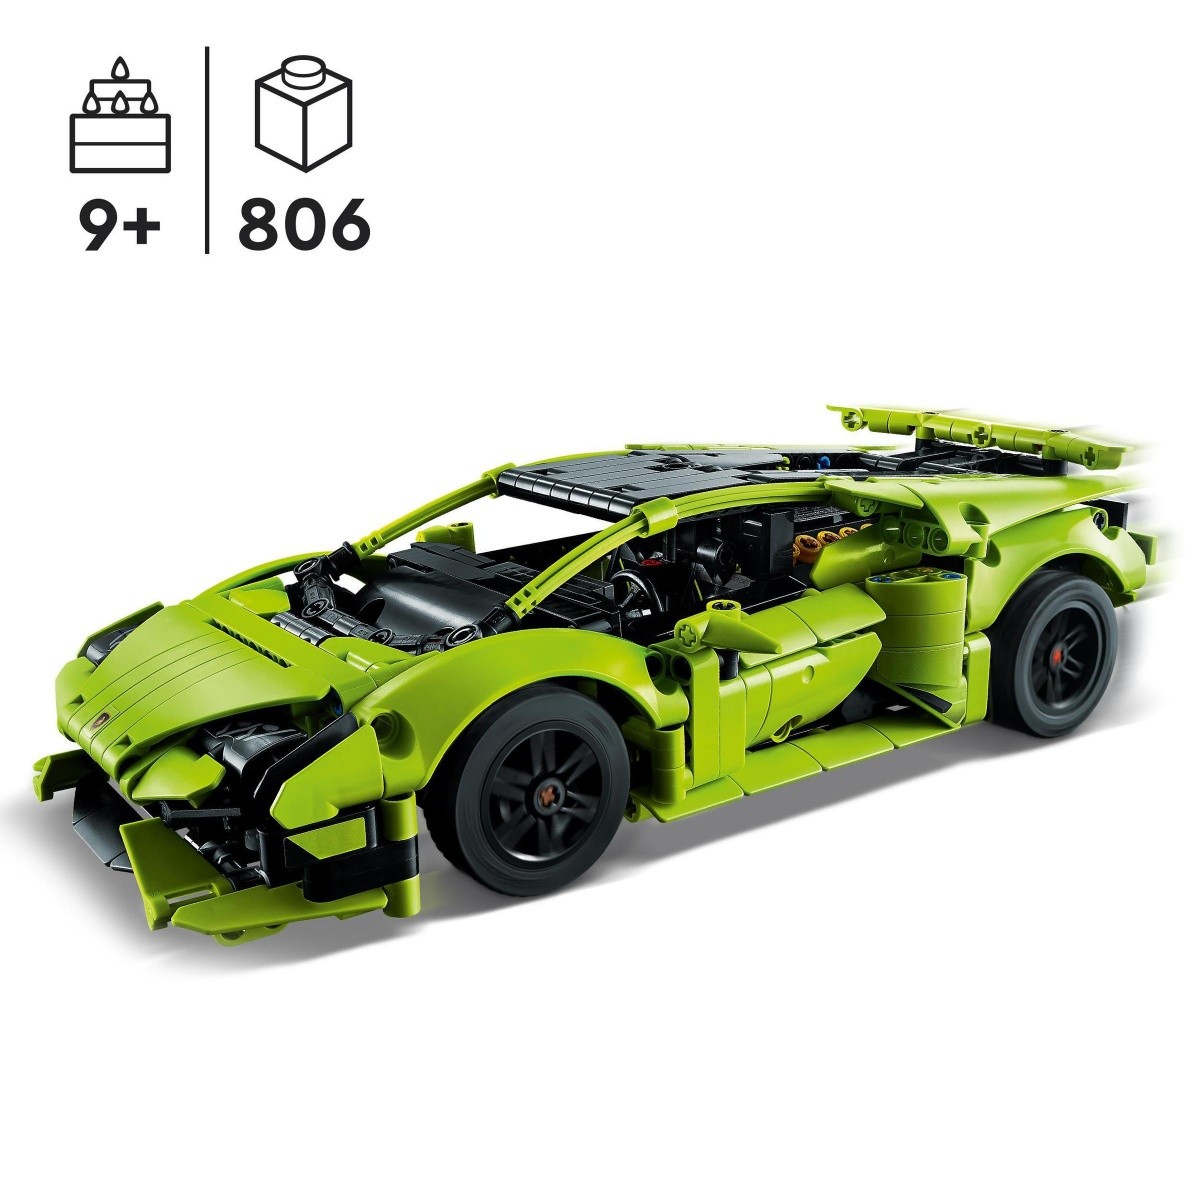 LEGO 42161 Technic Lamborghini Huracan Tecnica Model Car Set